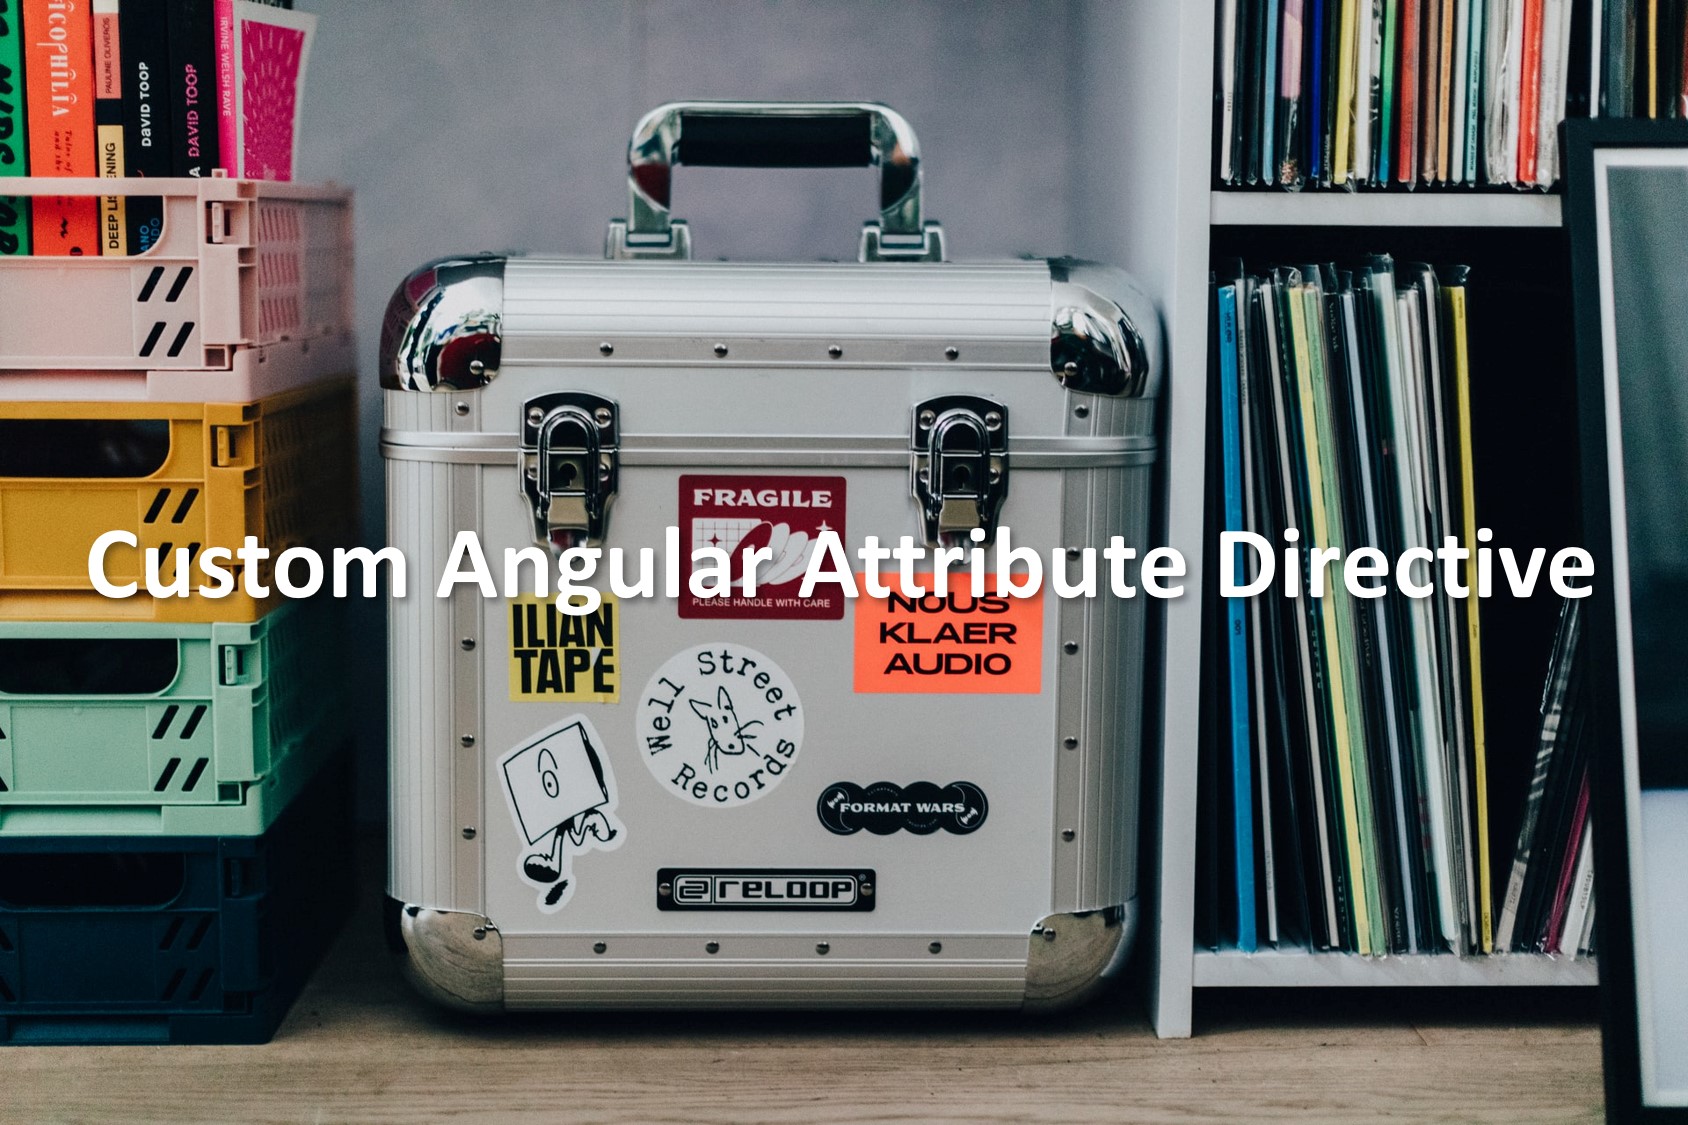 How to custom Angular attribute directive